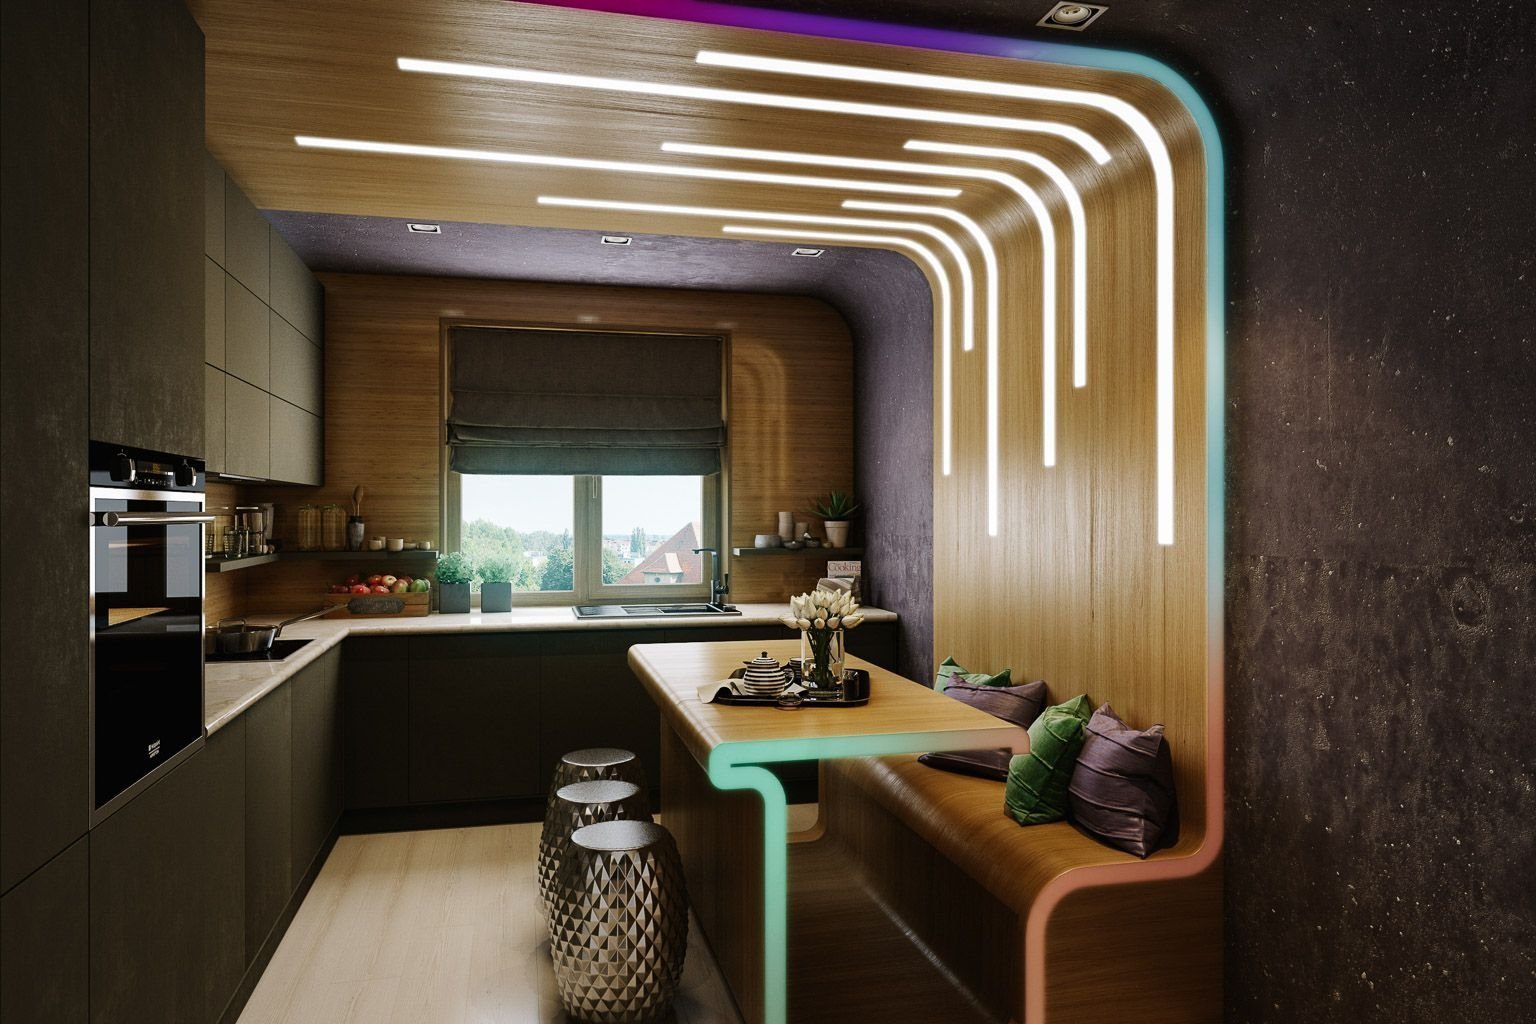 Интересный дизайн комнаты однокомнатной квартиры